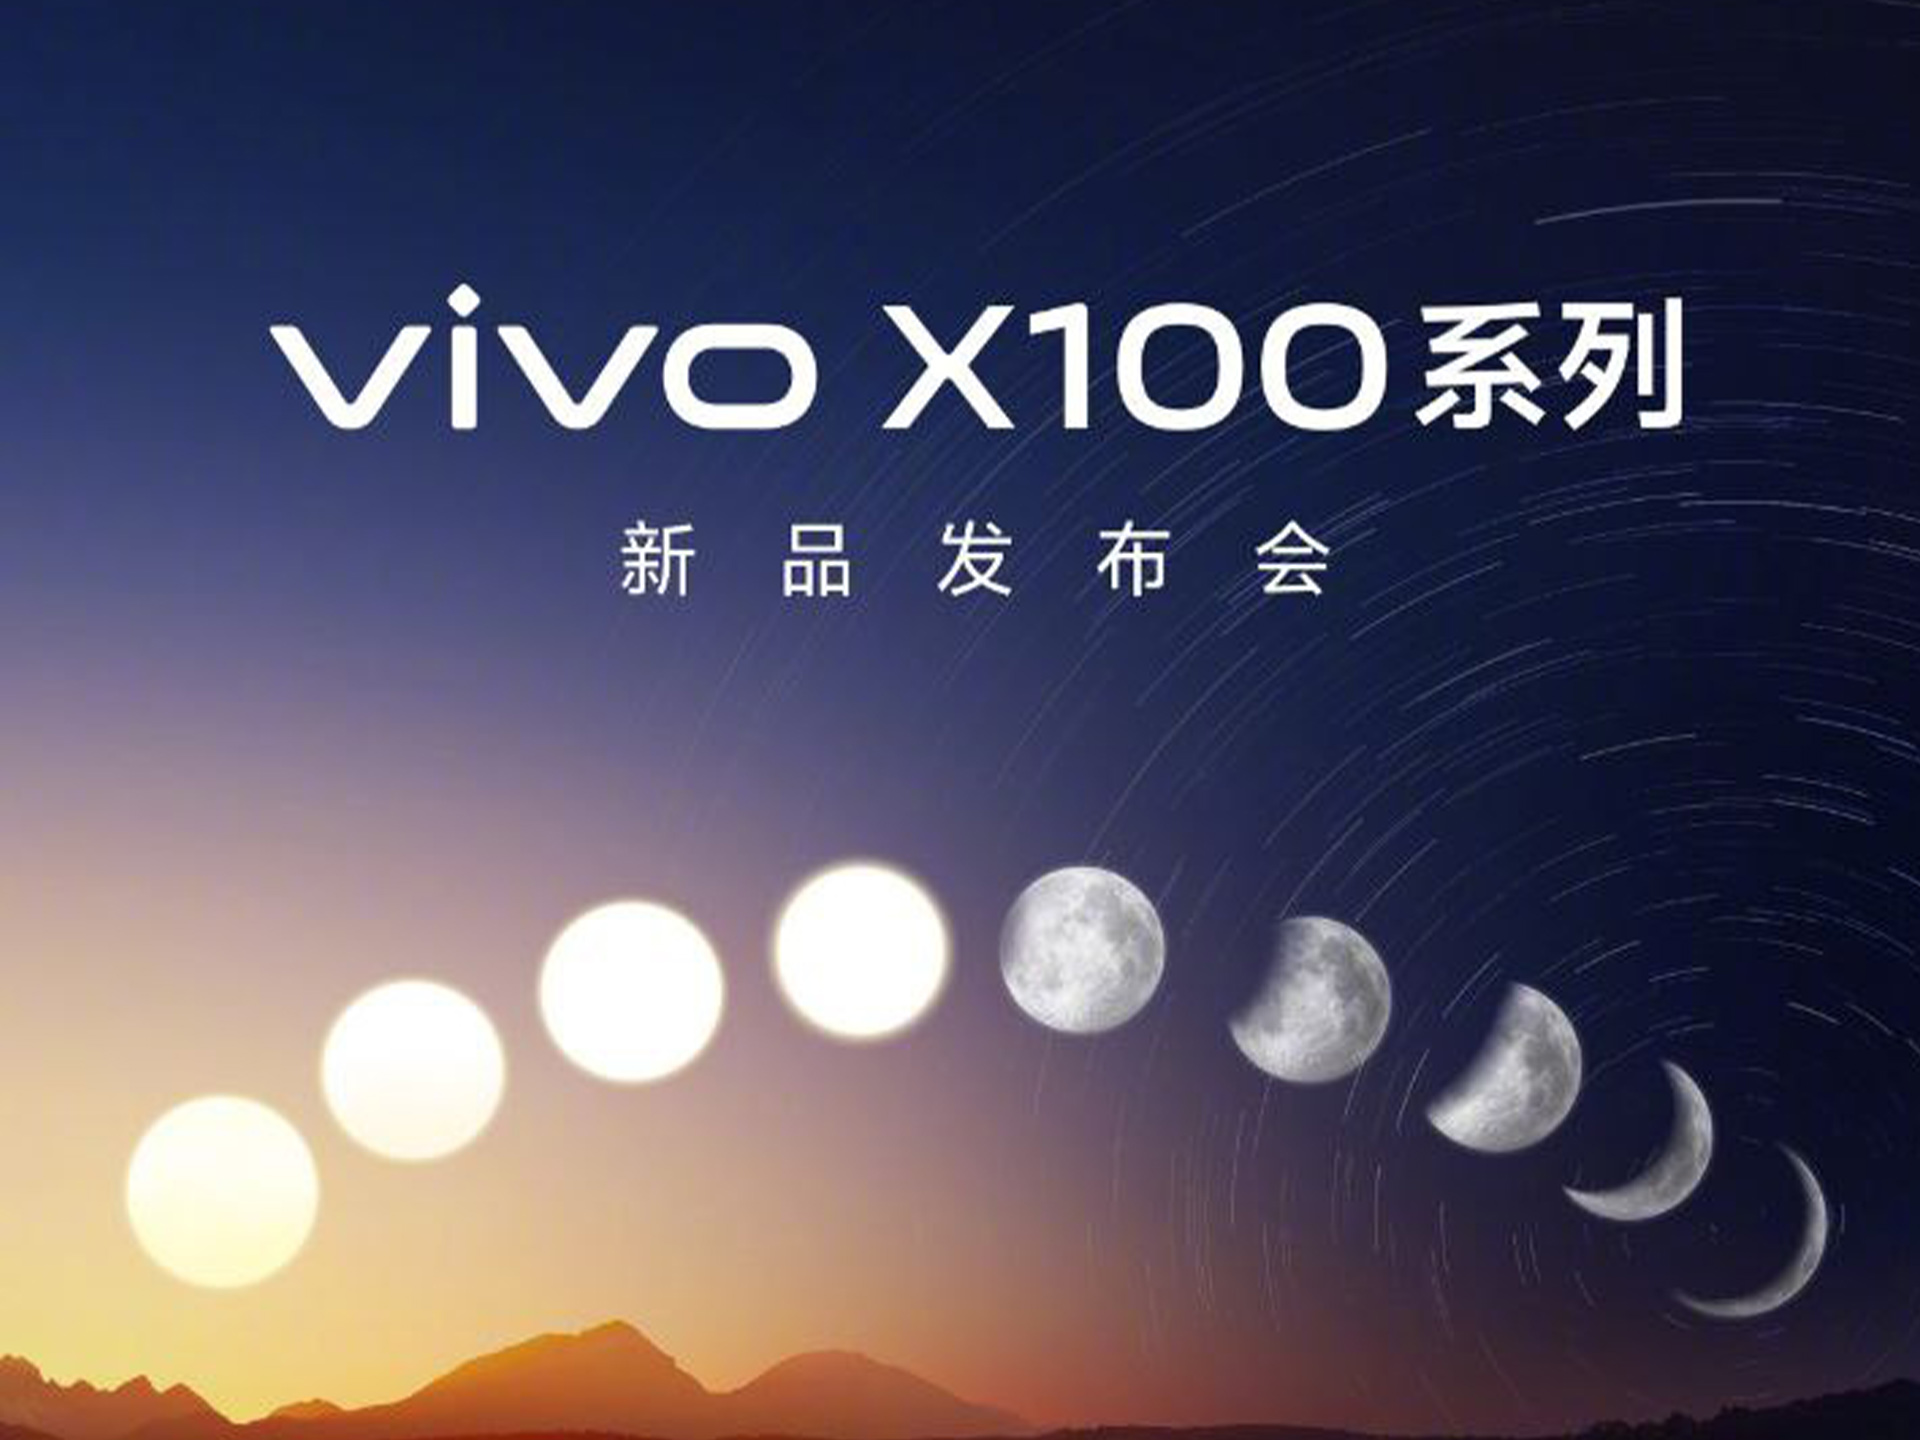 cVivo X100 Series and Vivo Watch 3 launch date announced